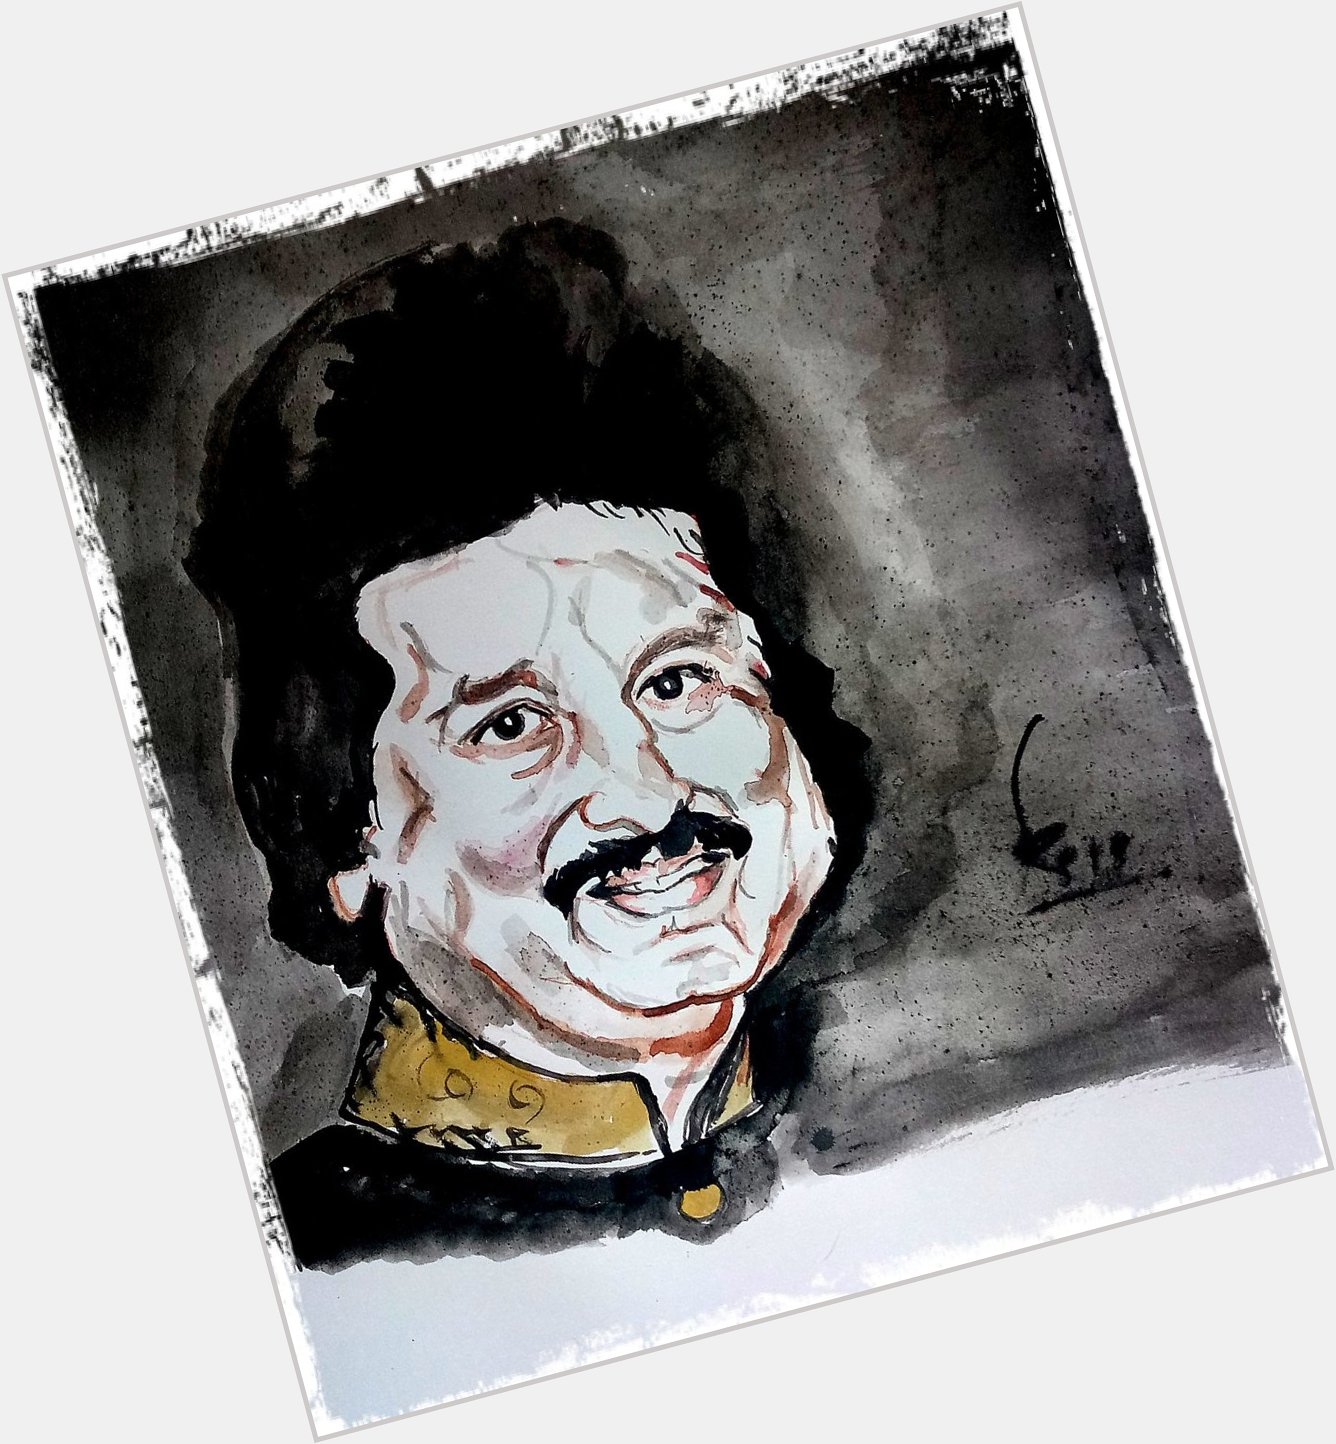 Happy birthday Pankaj Udhas ji
Watercolor on A 4 paper 